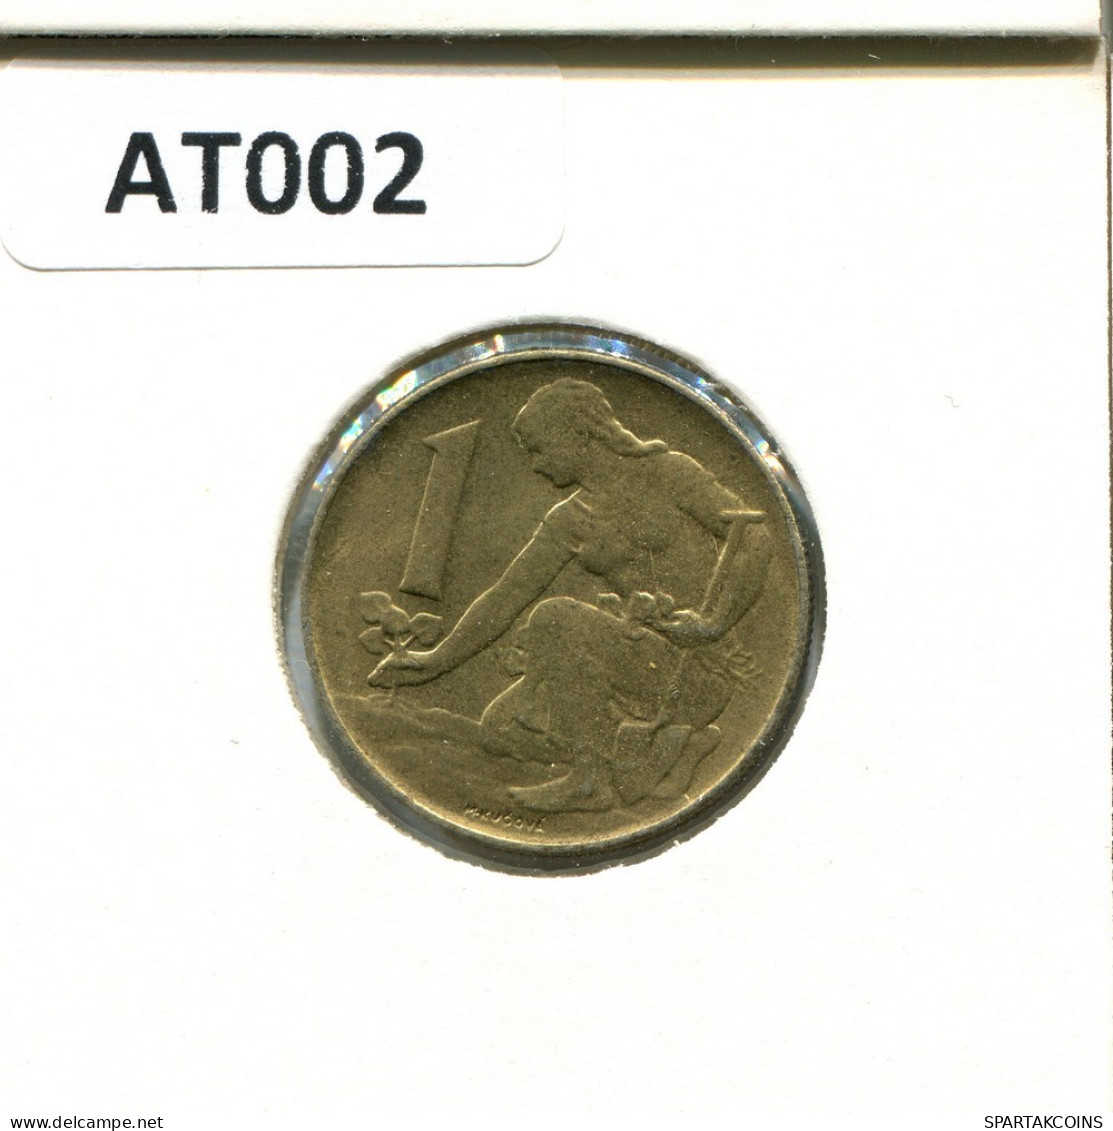 1 KORUNA 1992 CZECHOSLOVAKIA Coin #AT002.U.A - Checoslovaquia